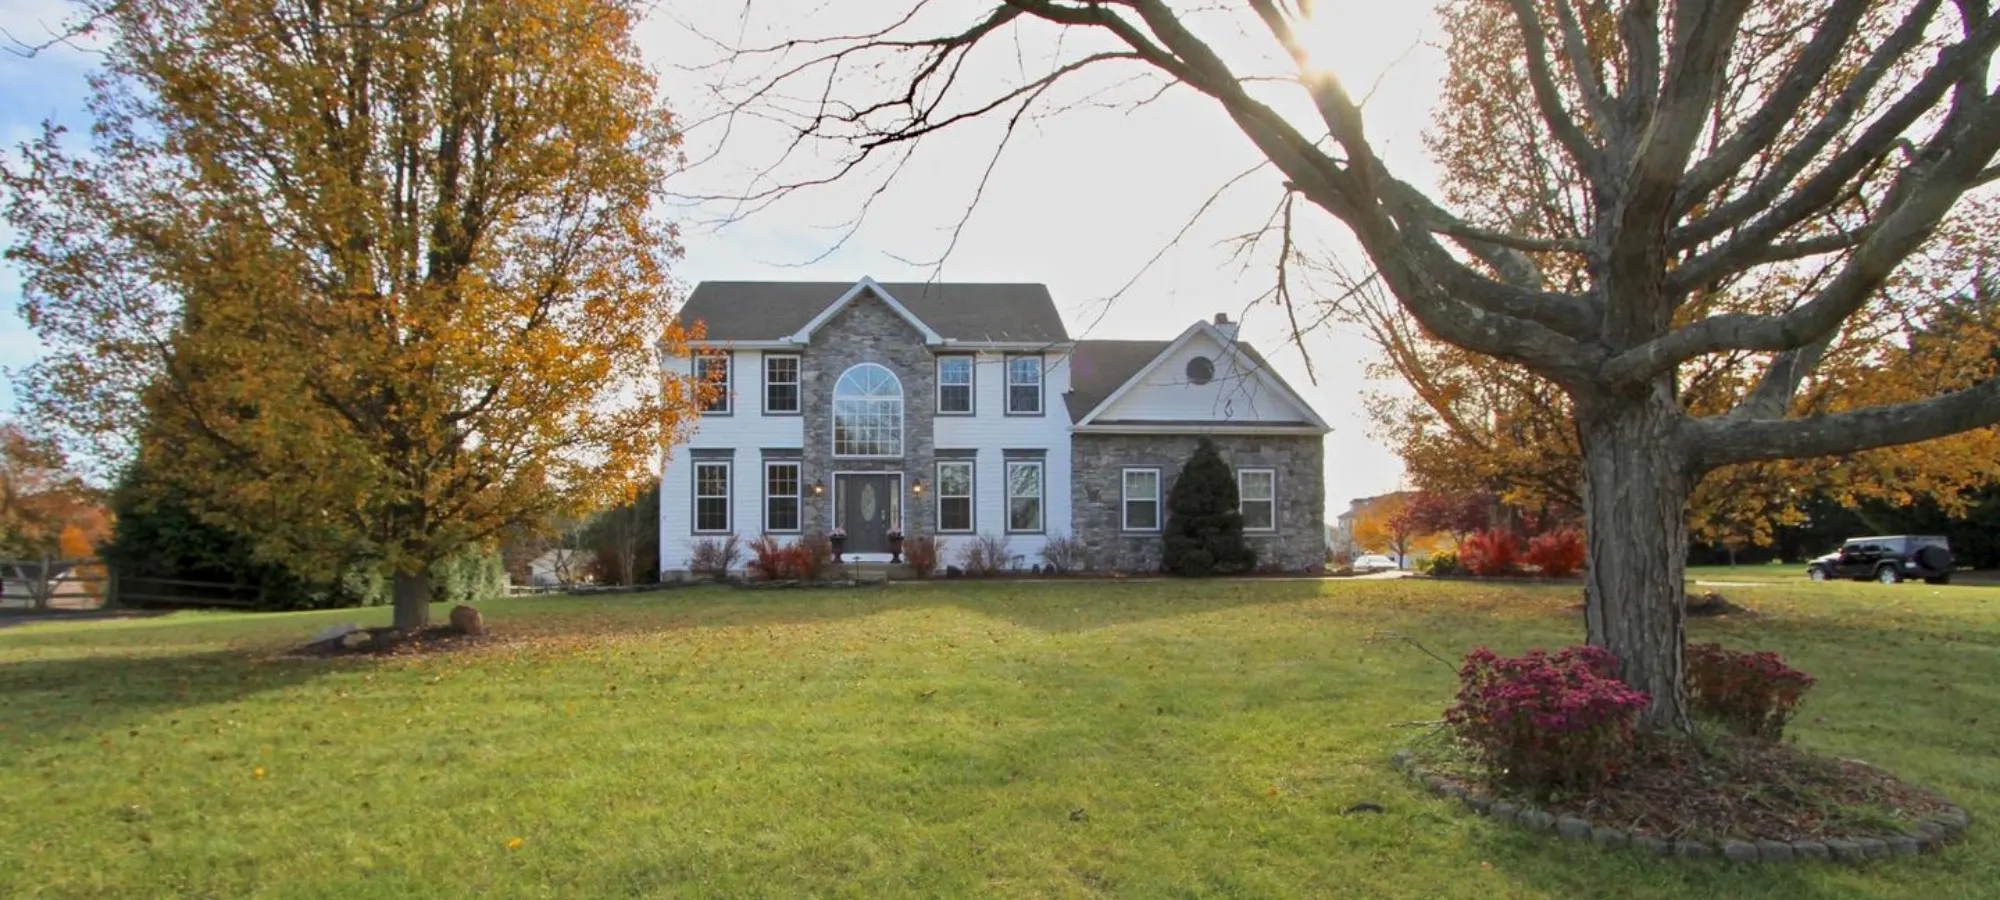 238_getmedia Delaware Real Estate | Find Your Dream Home with Burns & Ellis